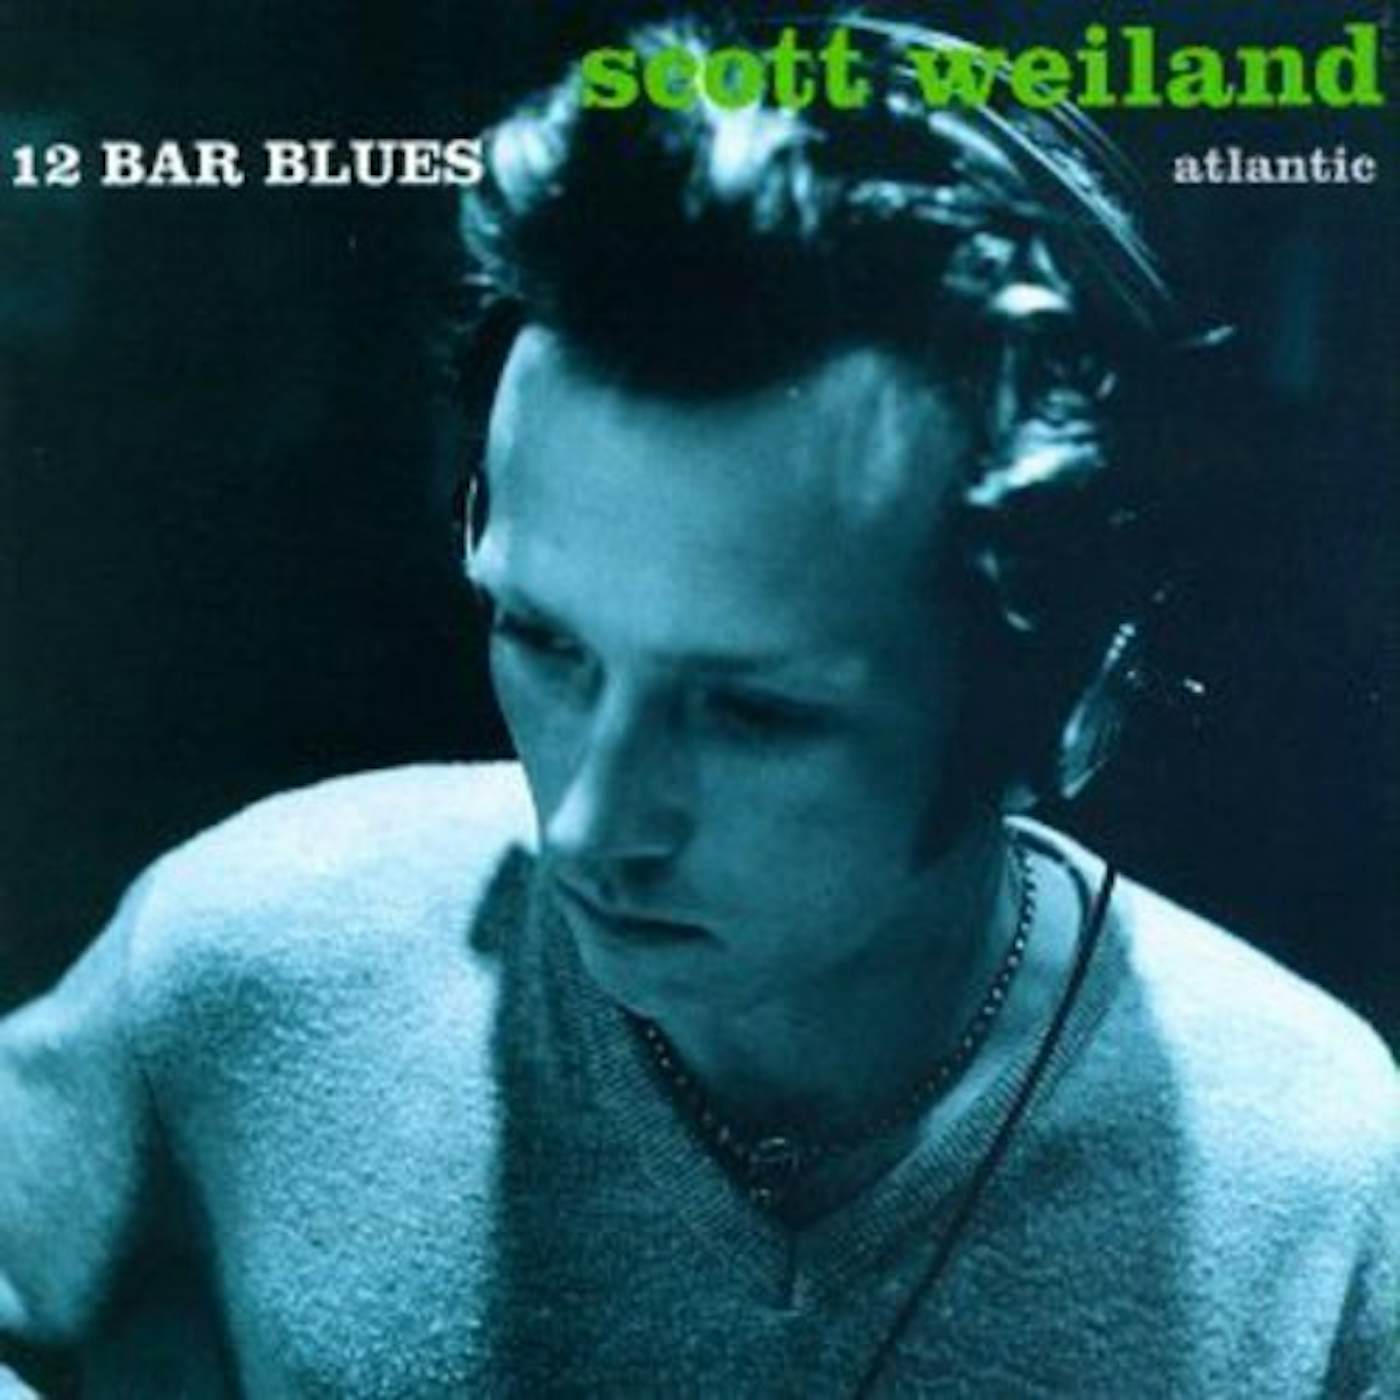 Scott Weiland - 12 Bar Blues RSD